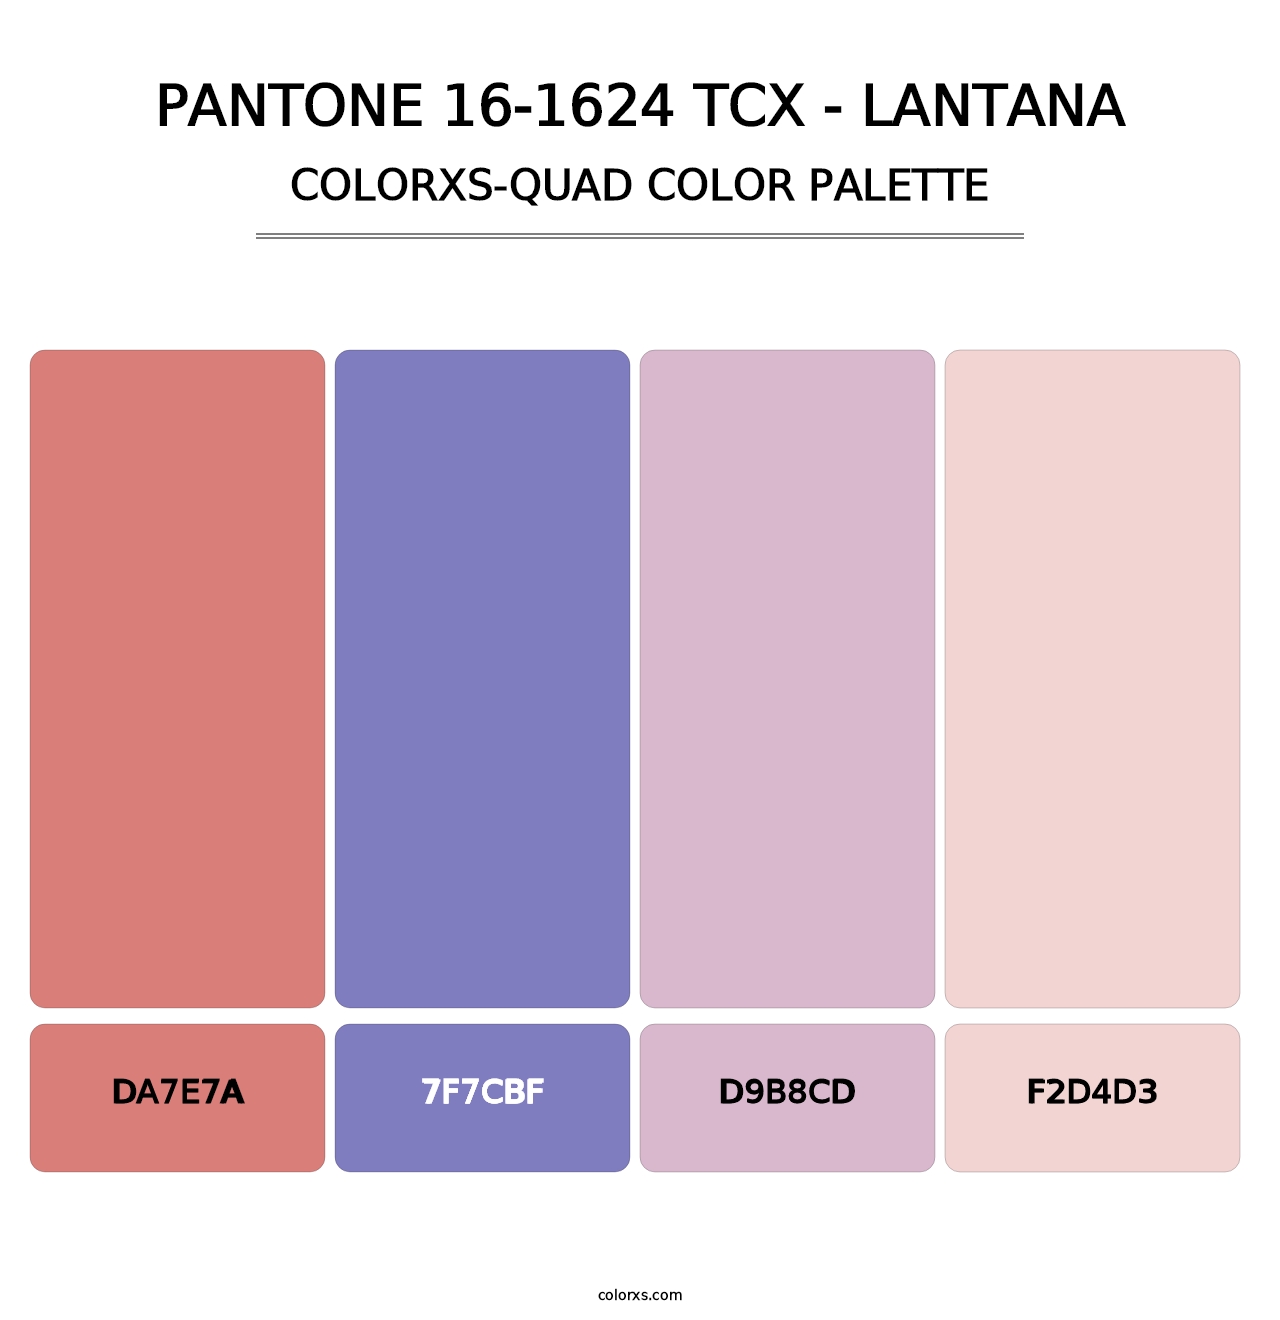 PANTONE 16-1624 TCX - Lantana - Colorxs Quad Palette